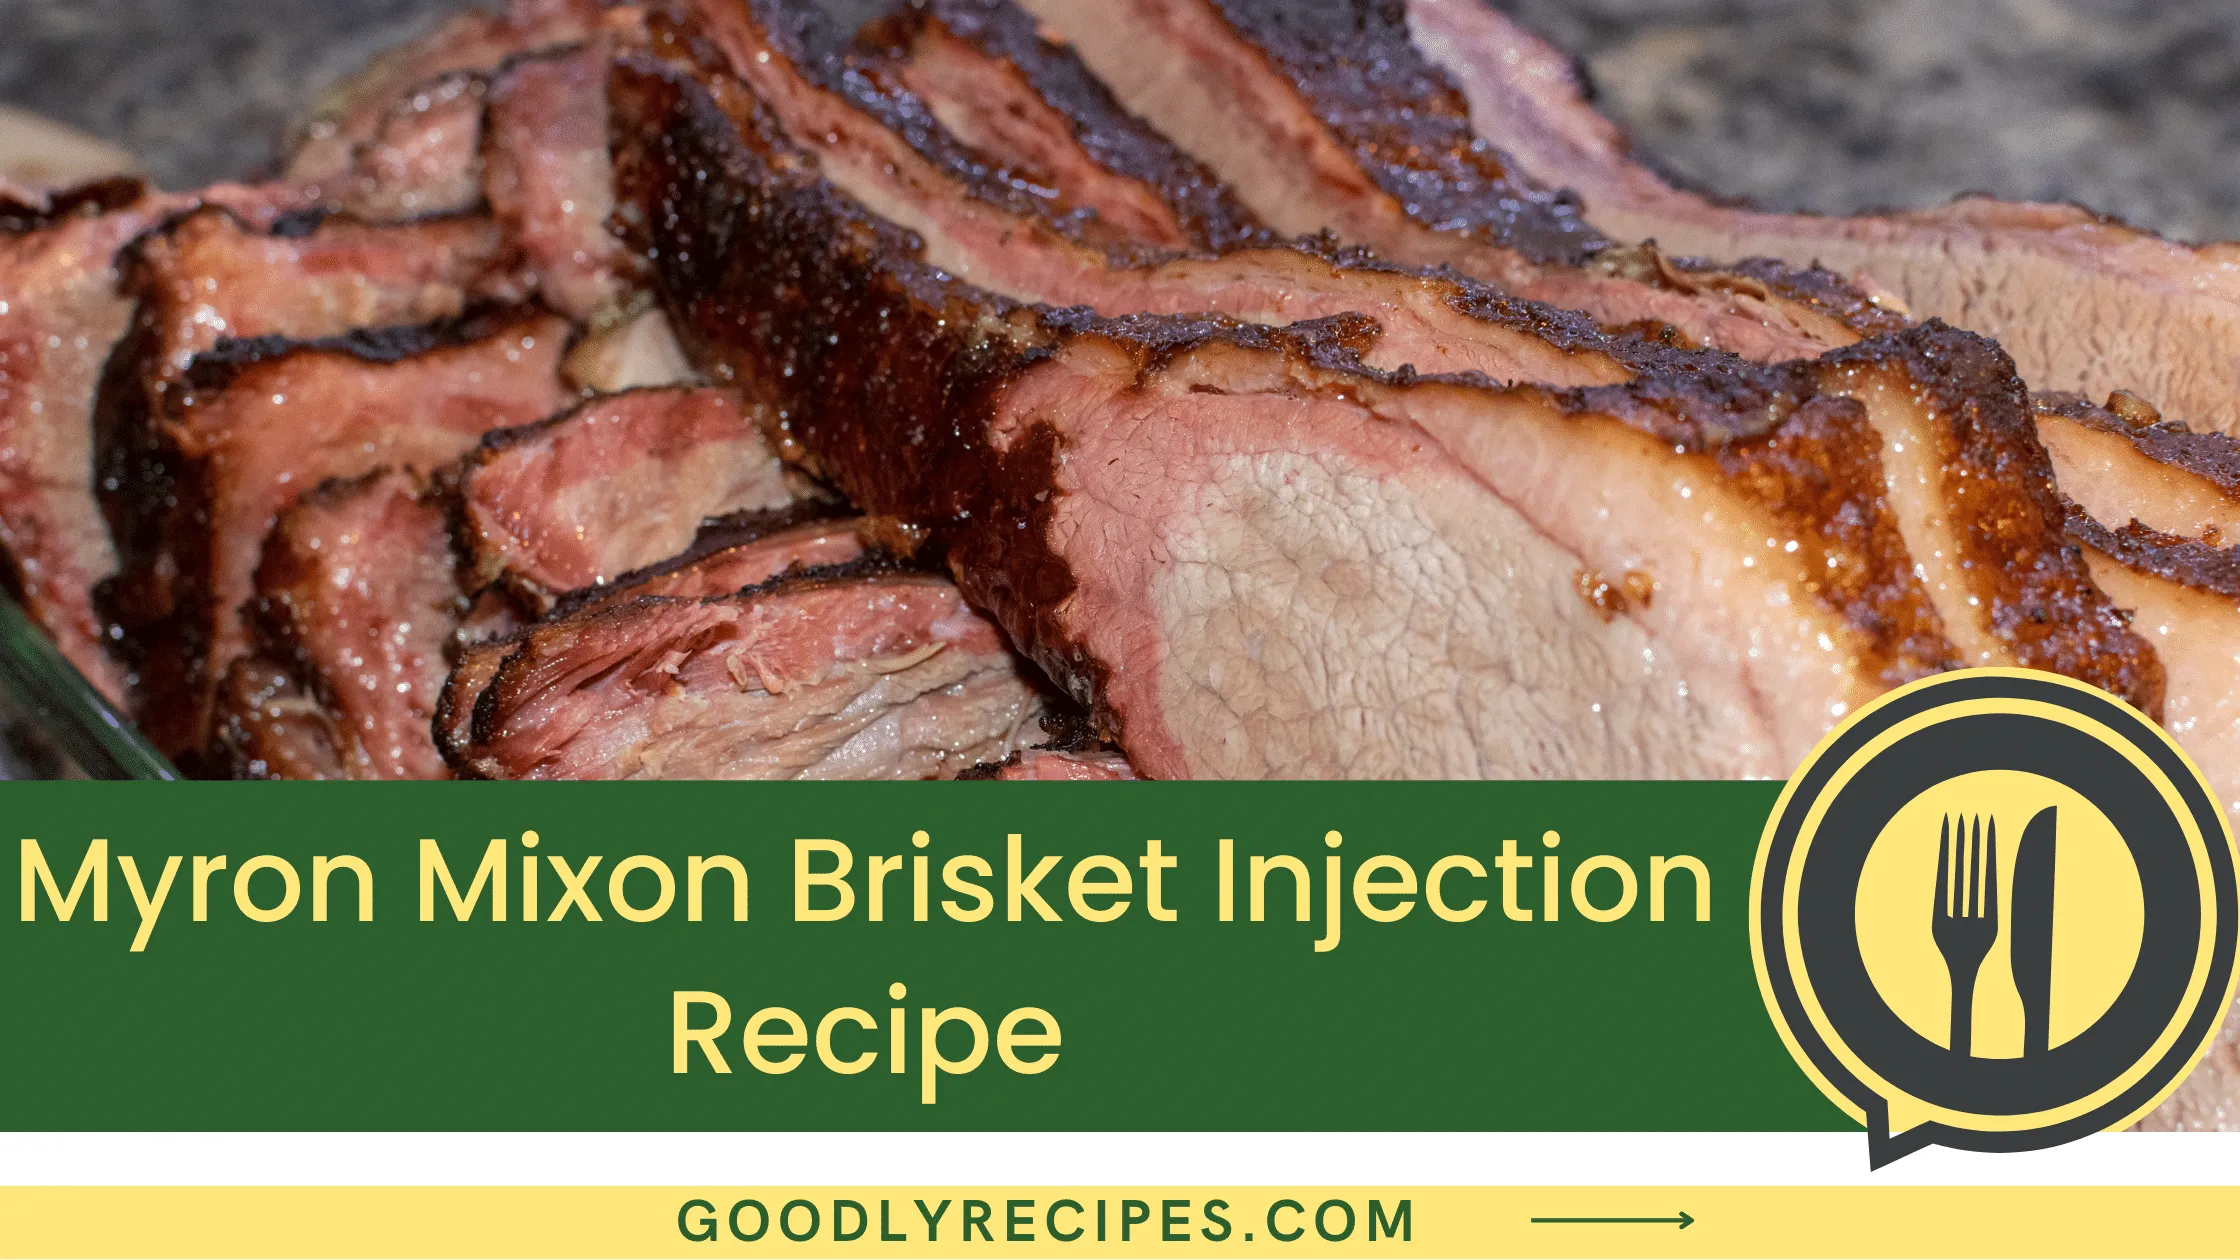 What is Myron Mixon Brisket Injection?